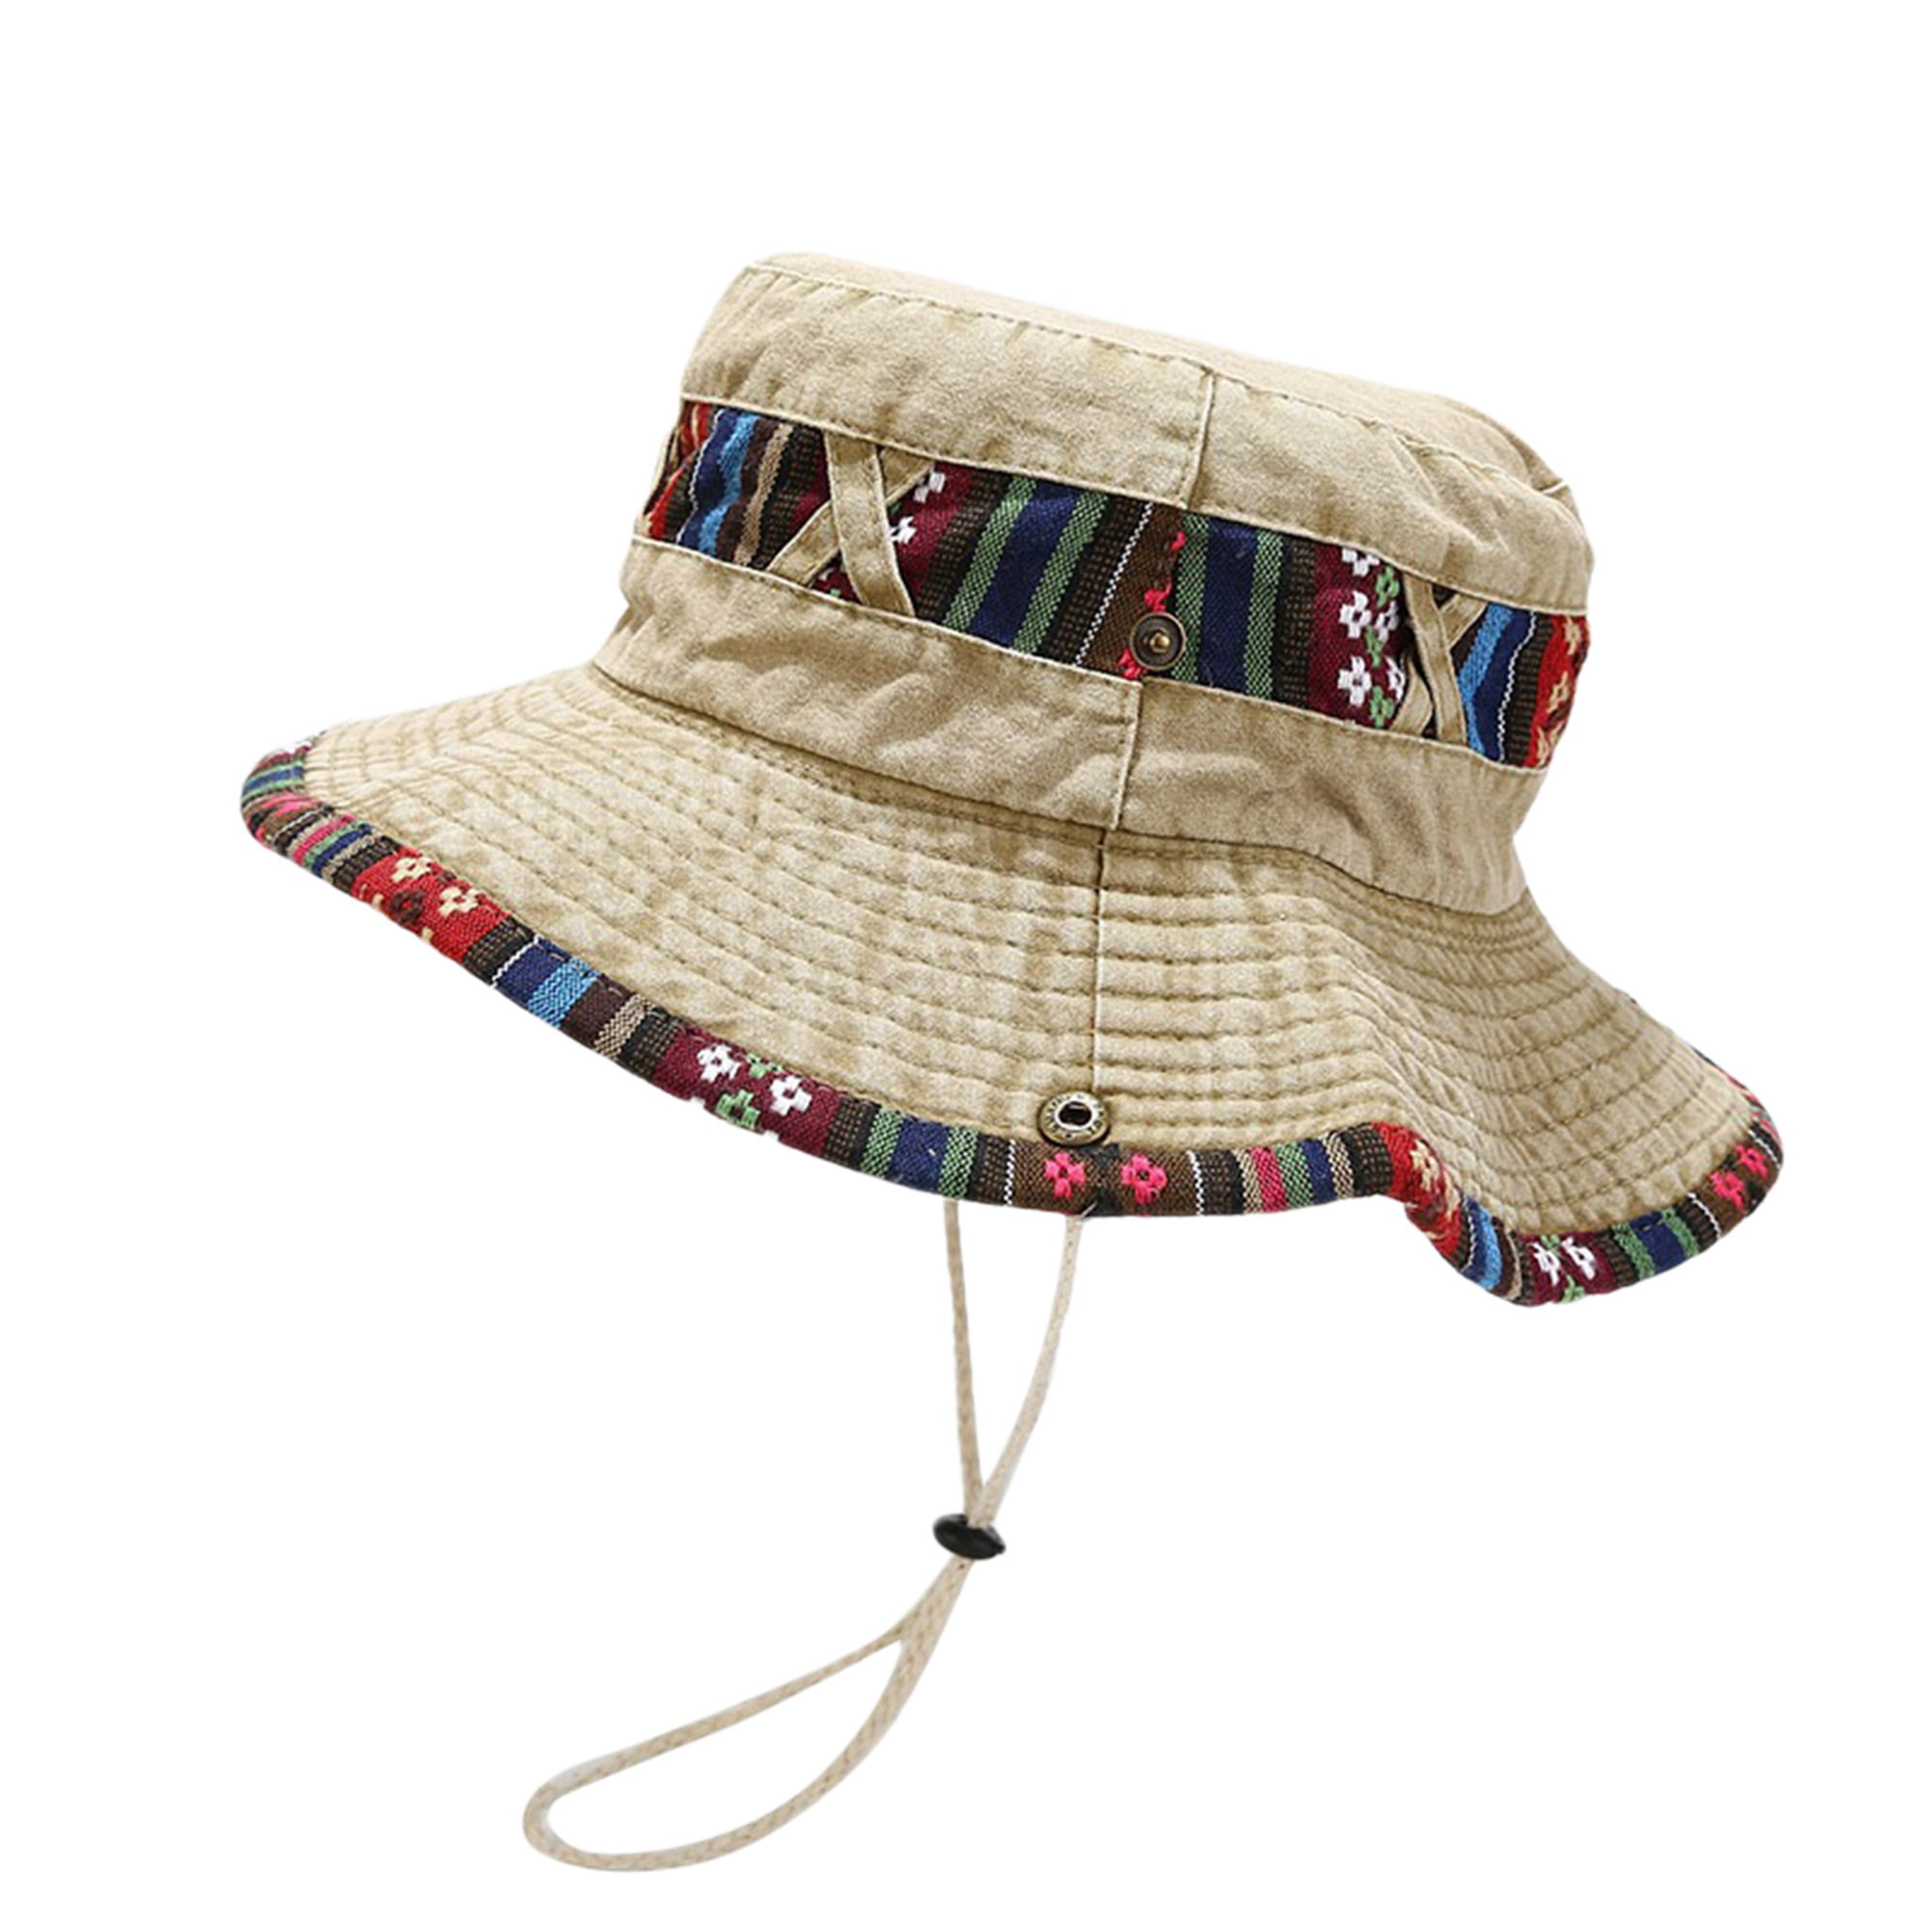 Afunbaby Women Men Cowboy Hat, Ethnic Style Wide Brim Bucket Hat Sun  Protection Panama Cap Boater Summer Beach Sunhat 